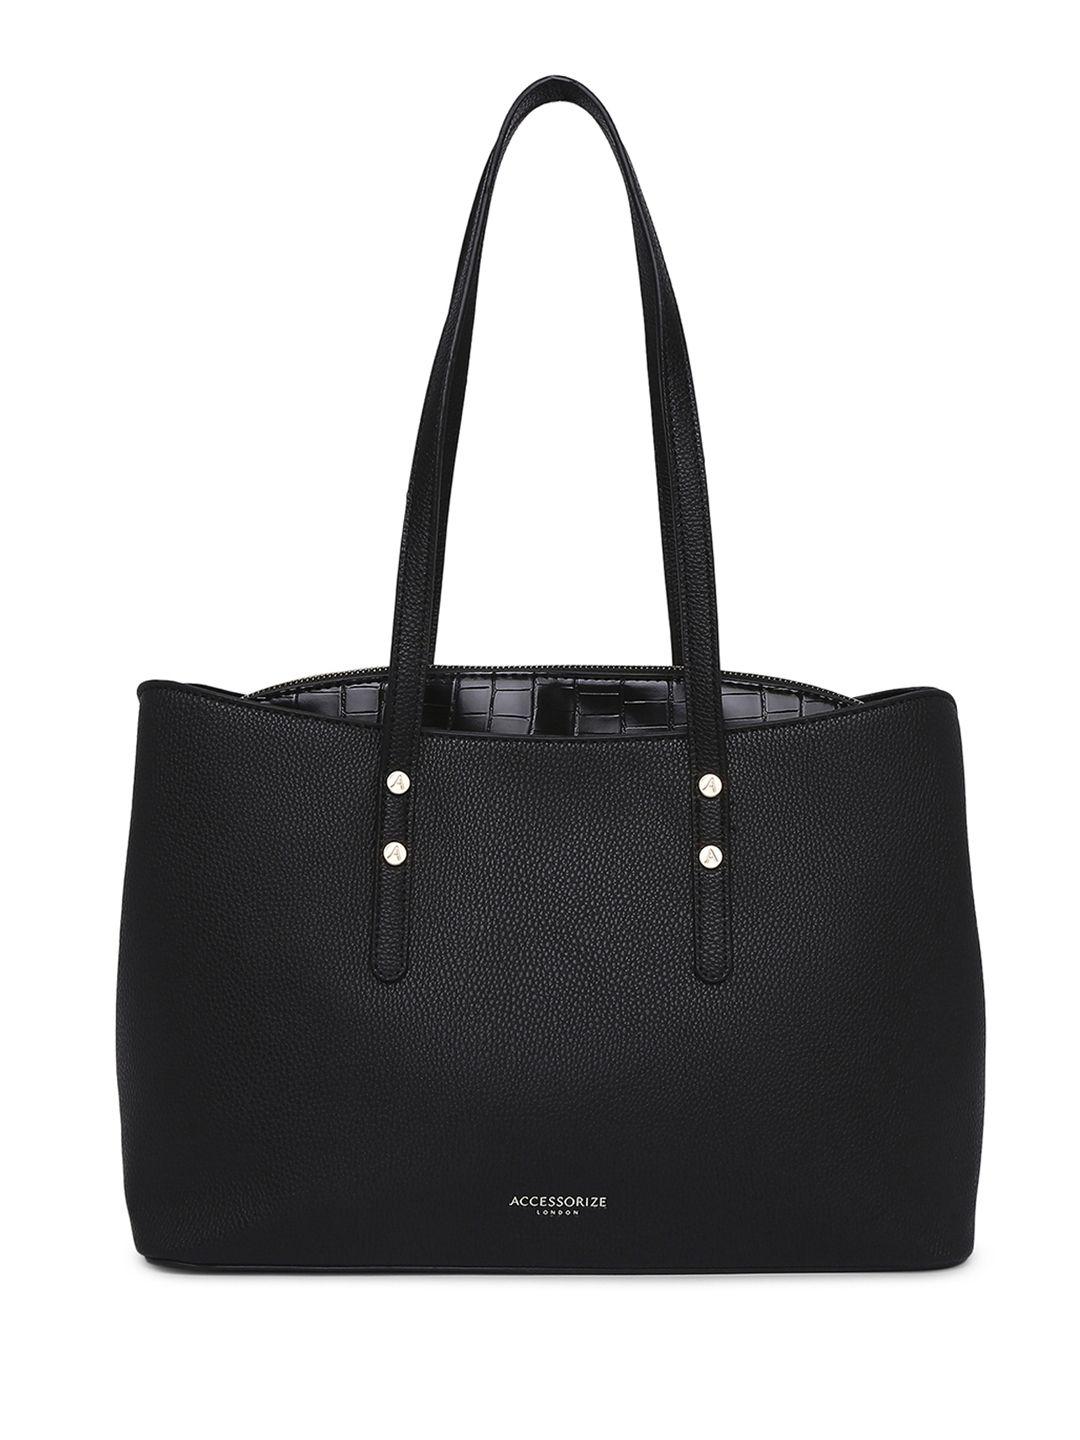 accessorize black structured kaia laptop shoulder bag